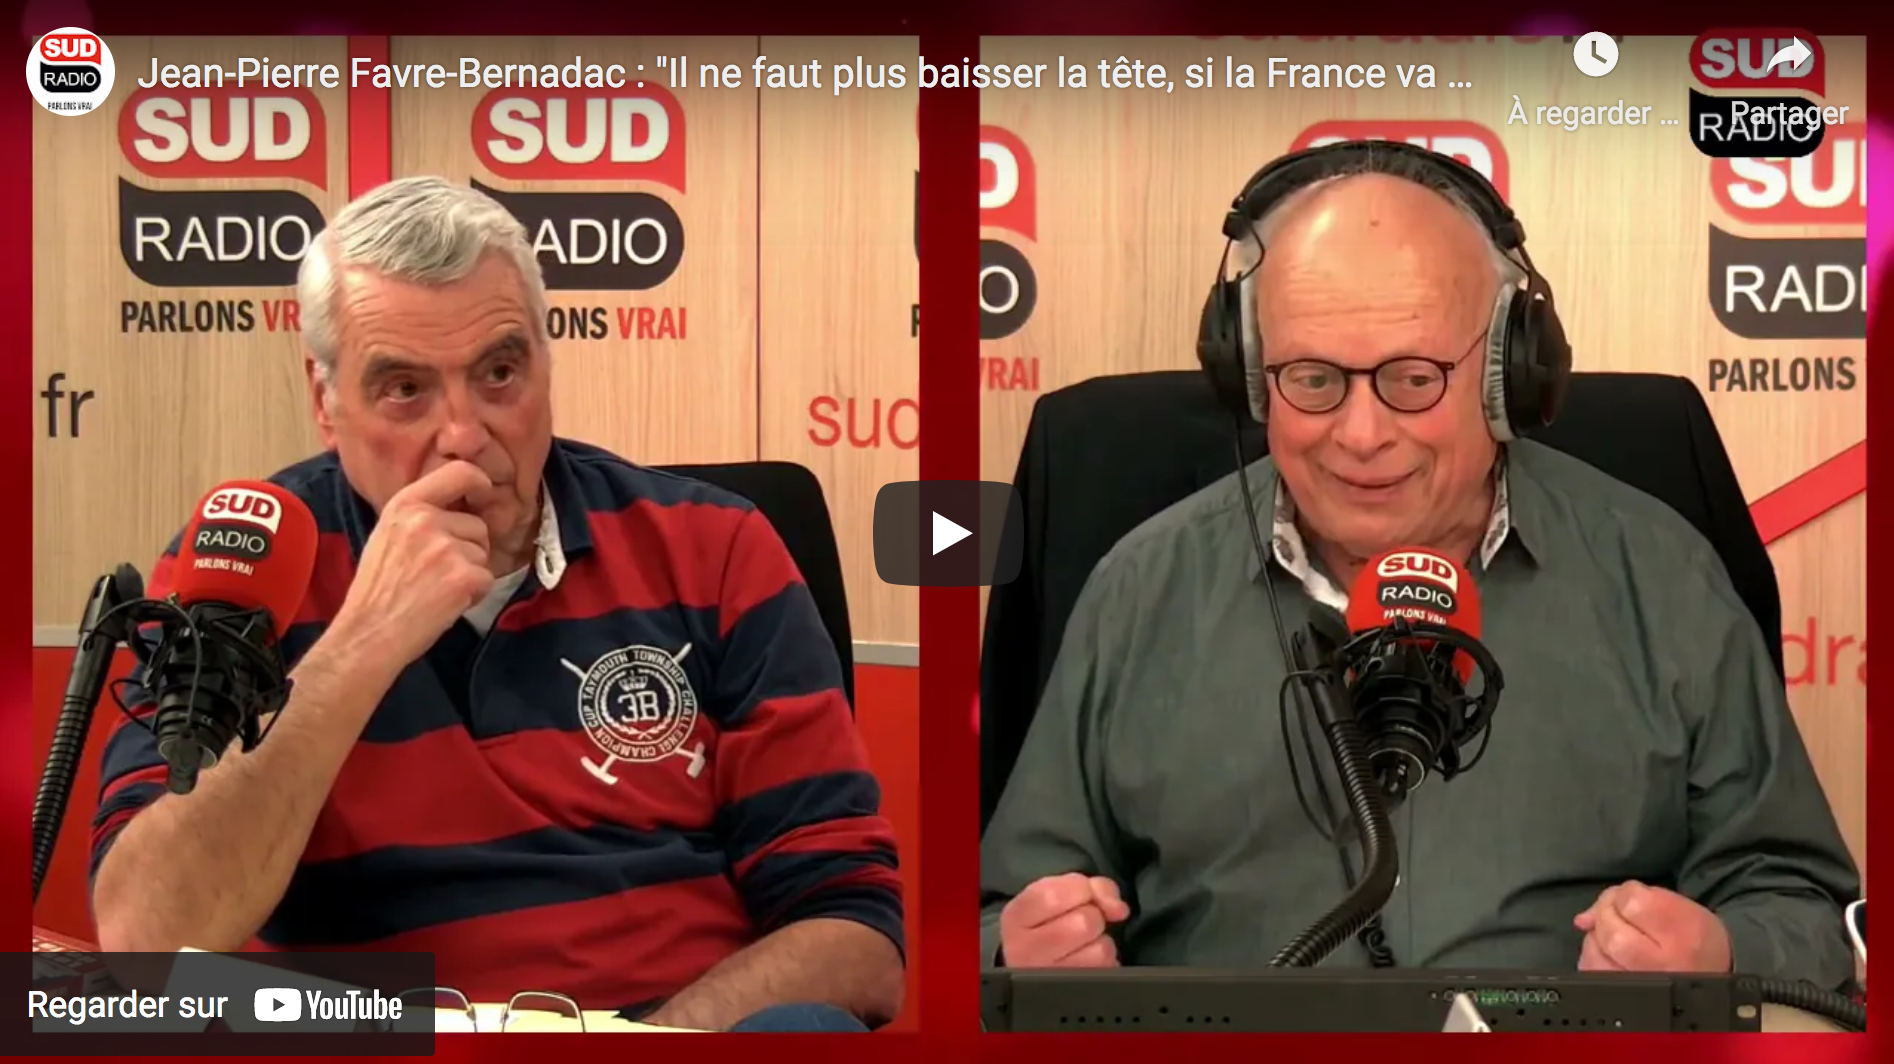 Jean-Pierre Favre-Bernadac : “Il ne faut plus baisser la tête, si la France va mal, il faut le dire” (VIDÉO)